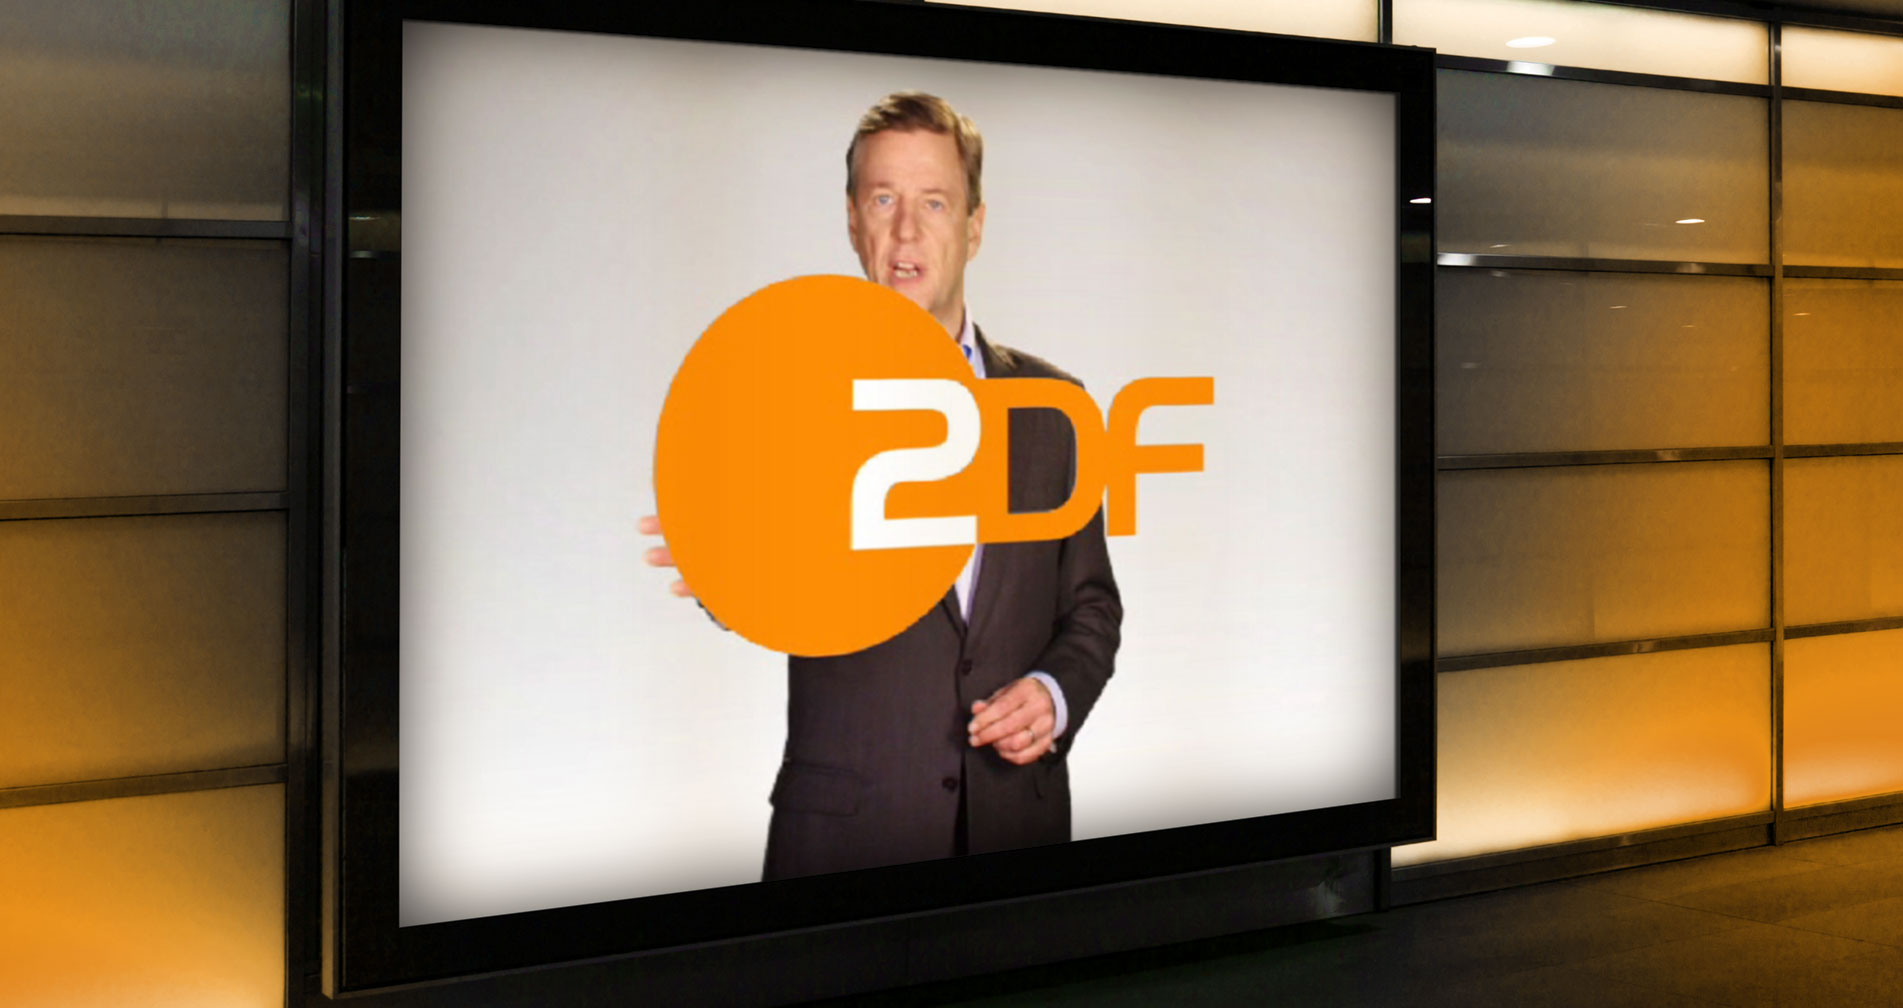 ZDF Corporate Films